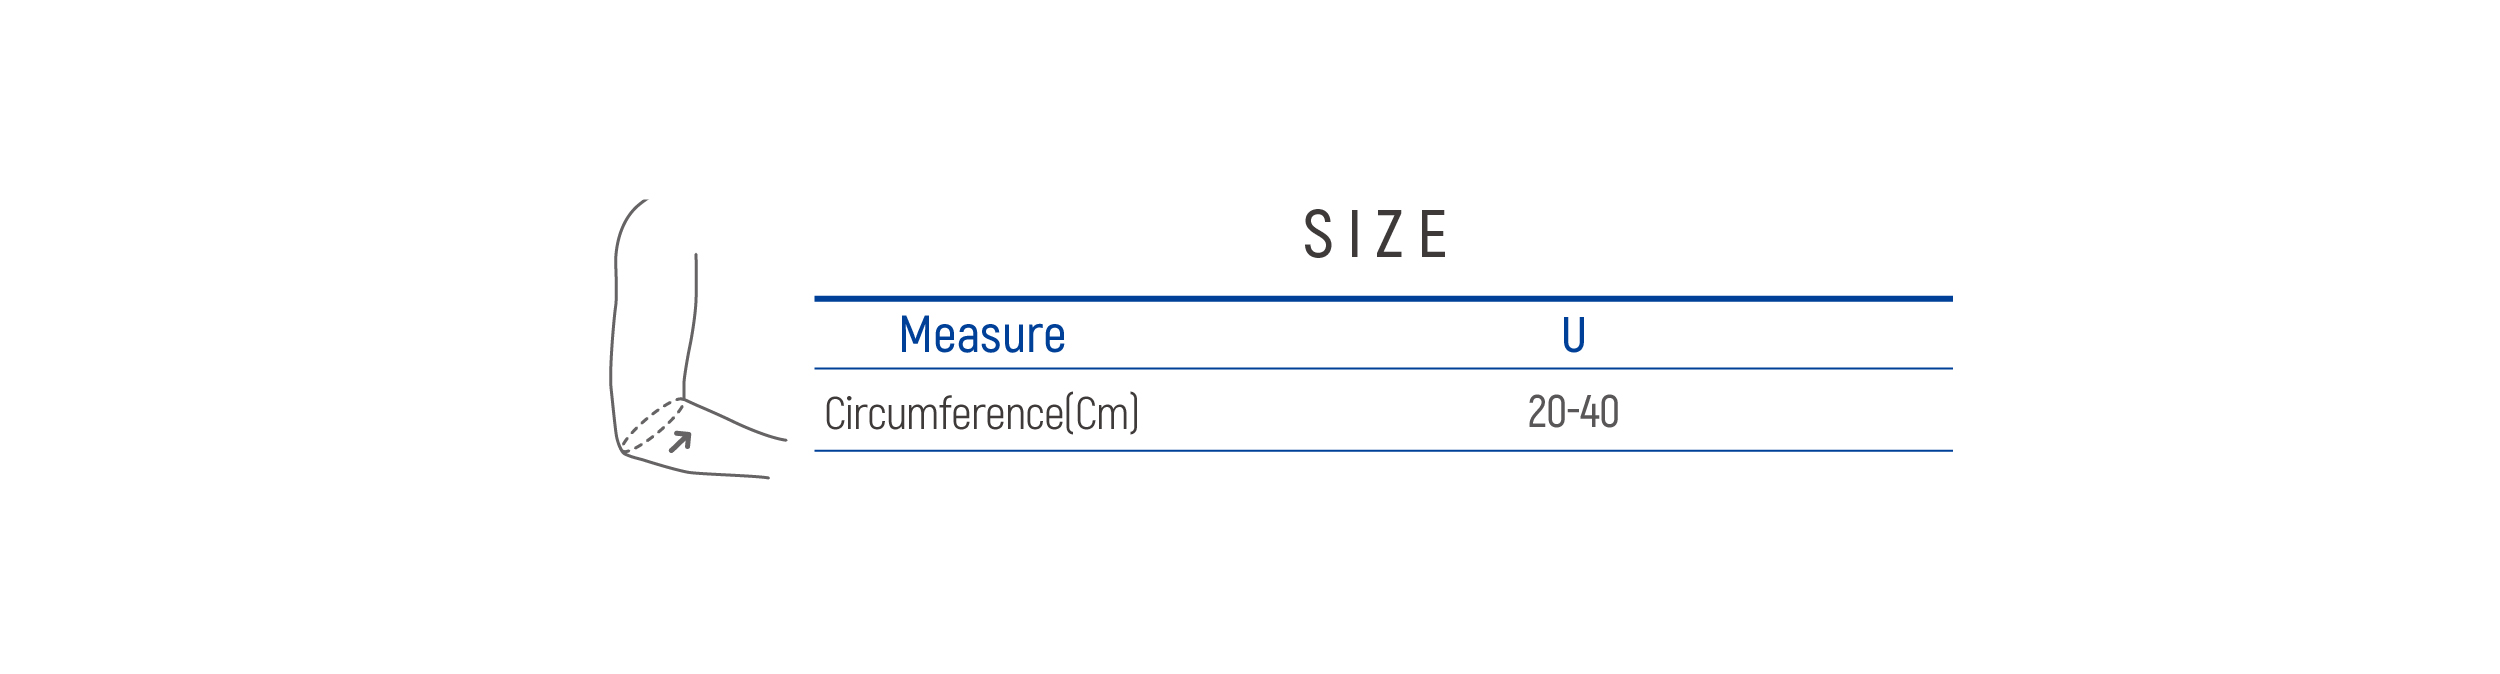 DR-E001 Size table image